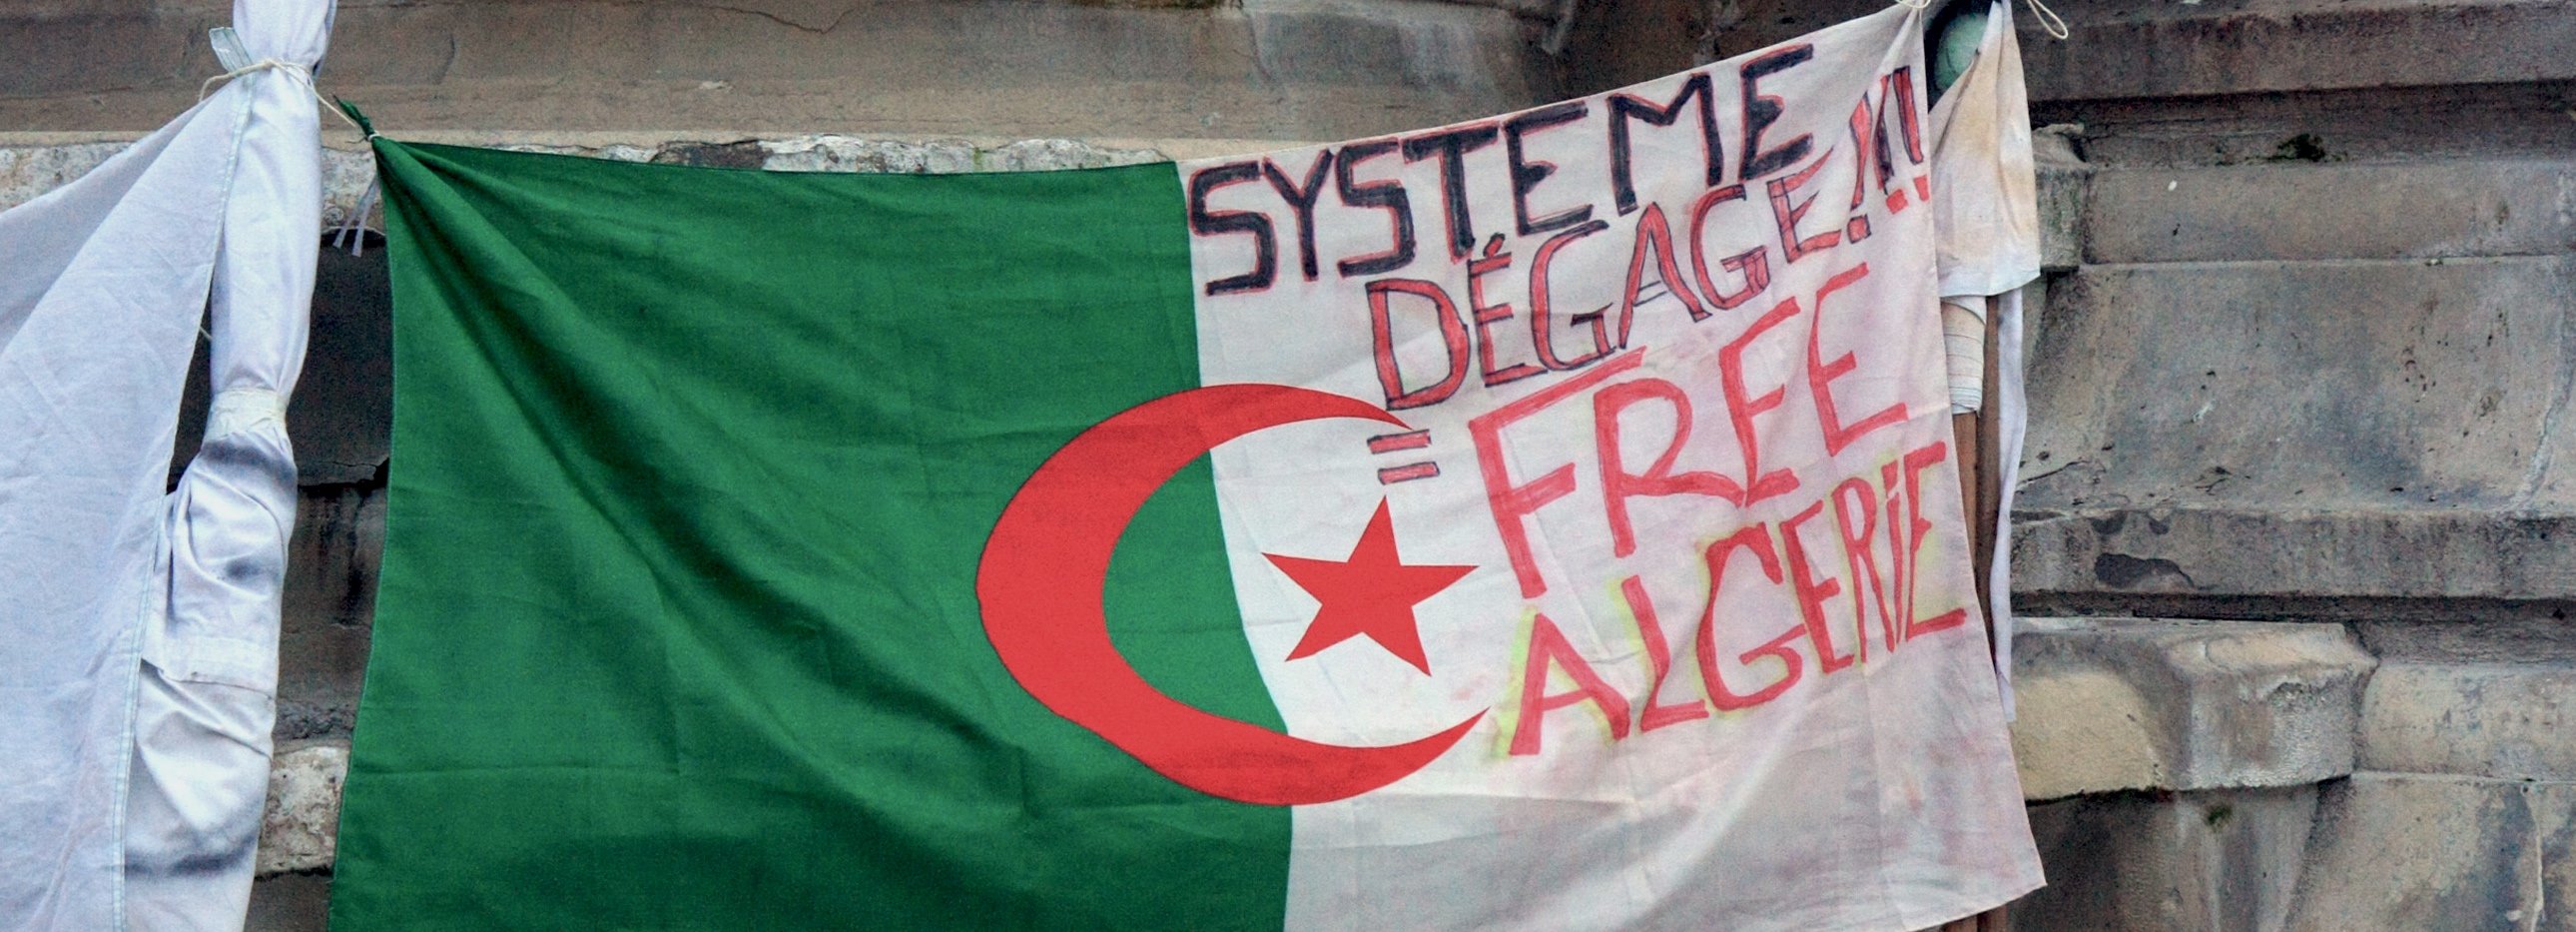 free algeria_@Photothèque Rouge_Photothèque Rouge_JMB. Kopie.jpg